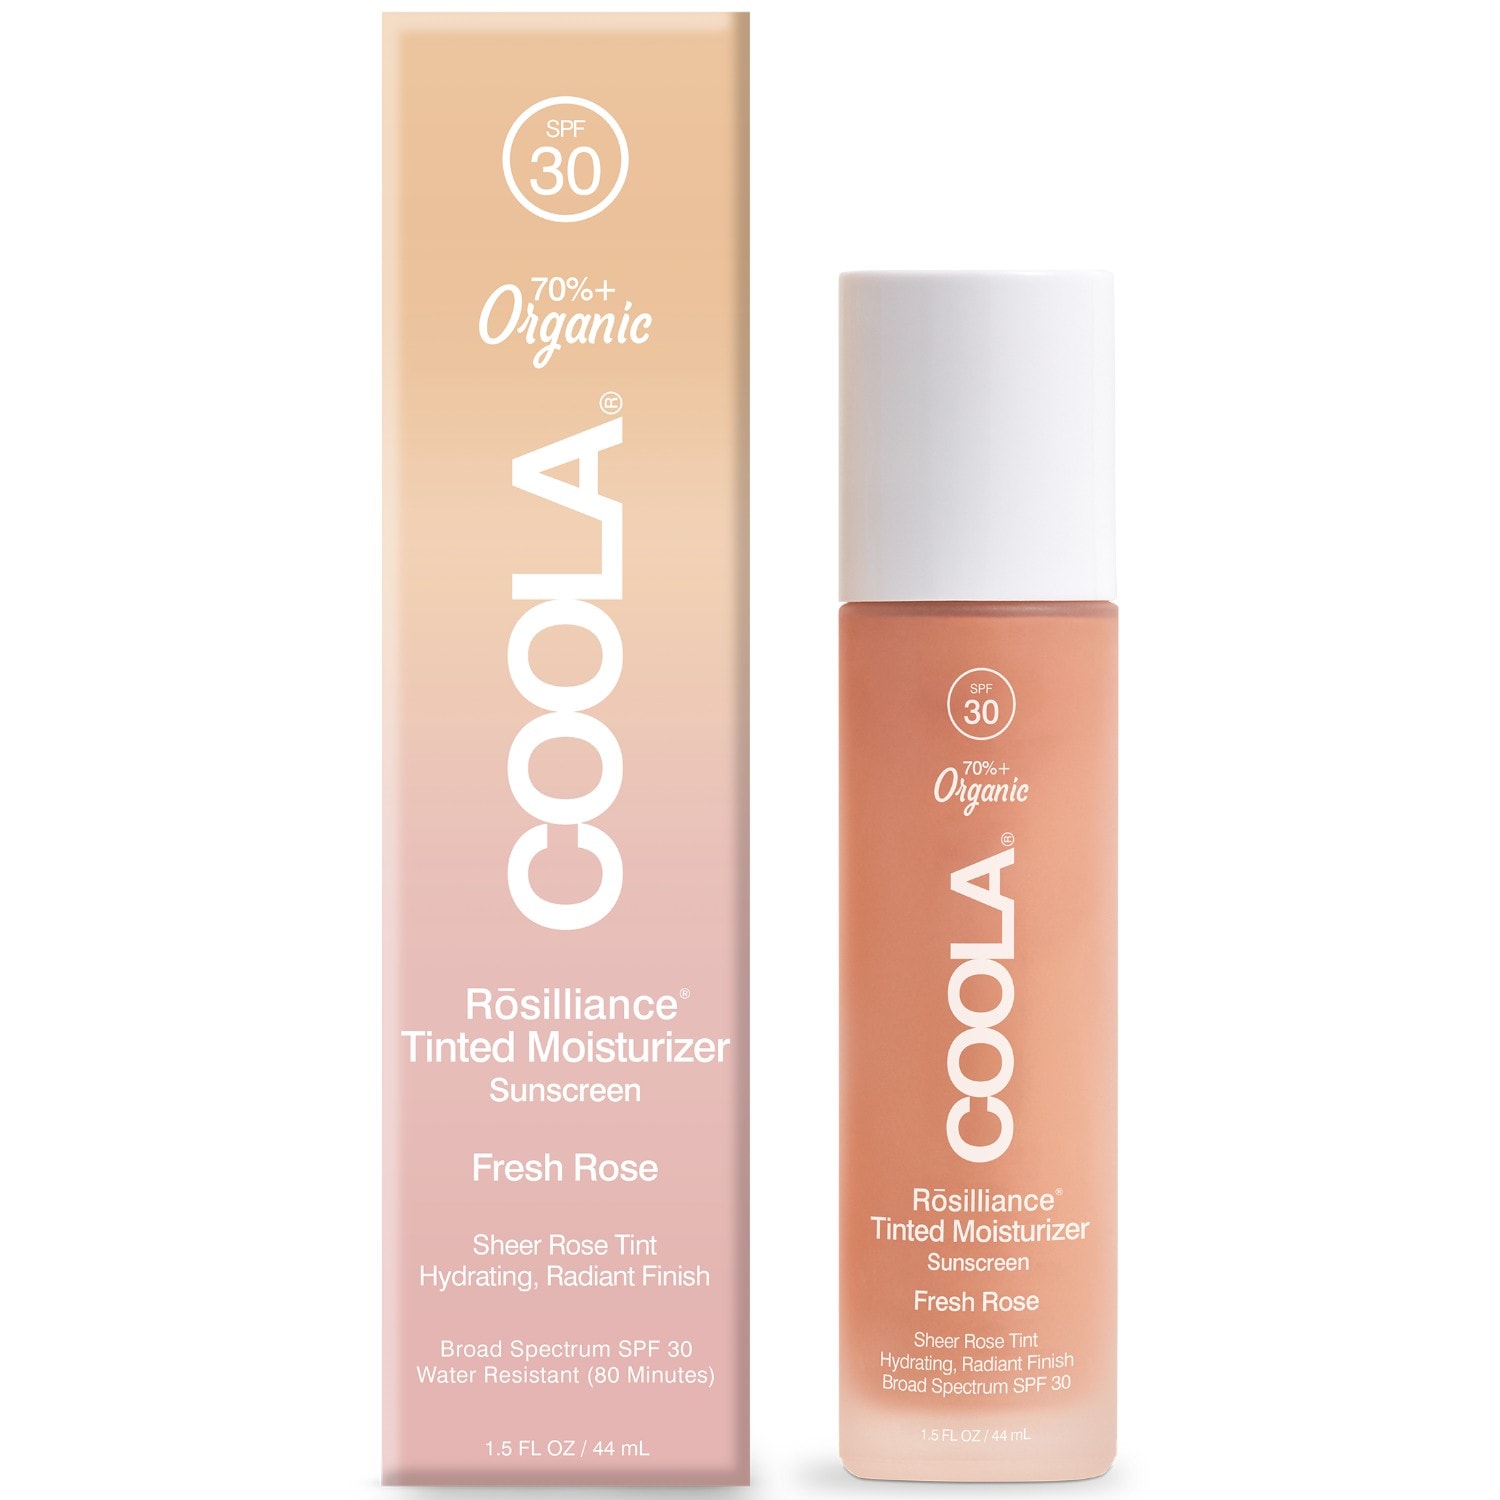 Coola Beauty Rosiliance Organic BB+ Cream SPF 30, Light / Medium